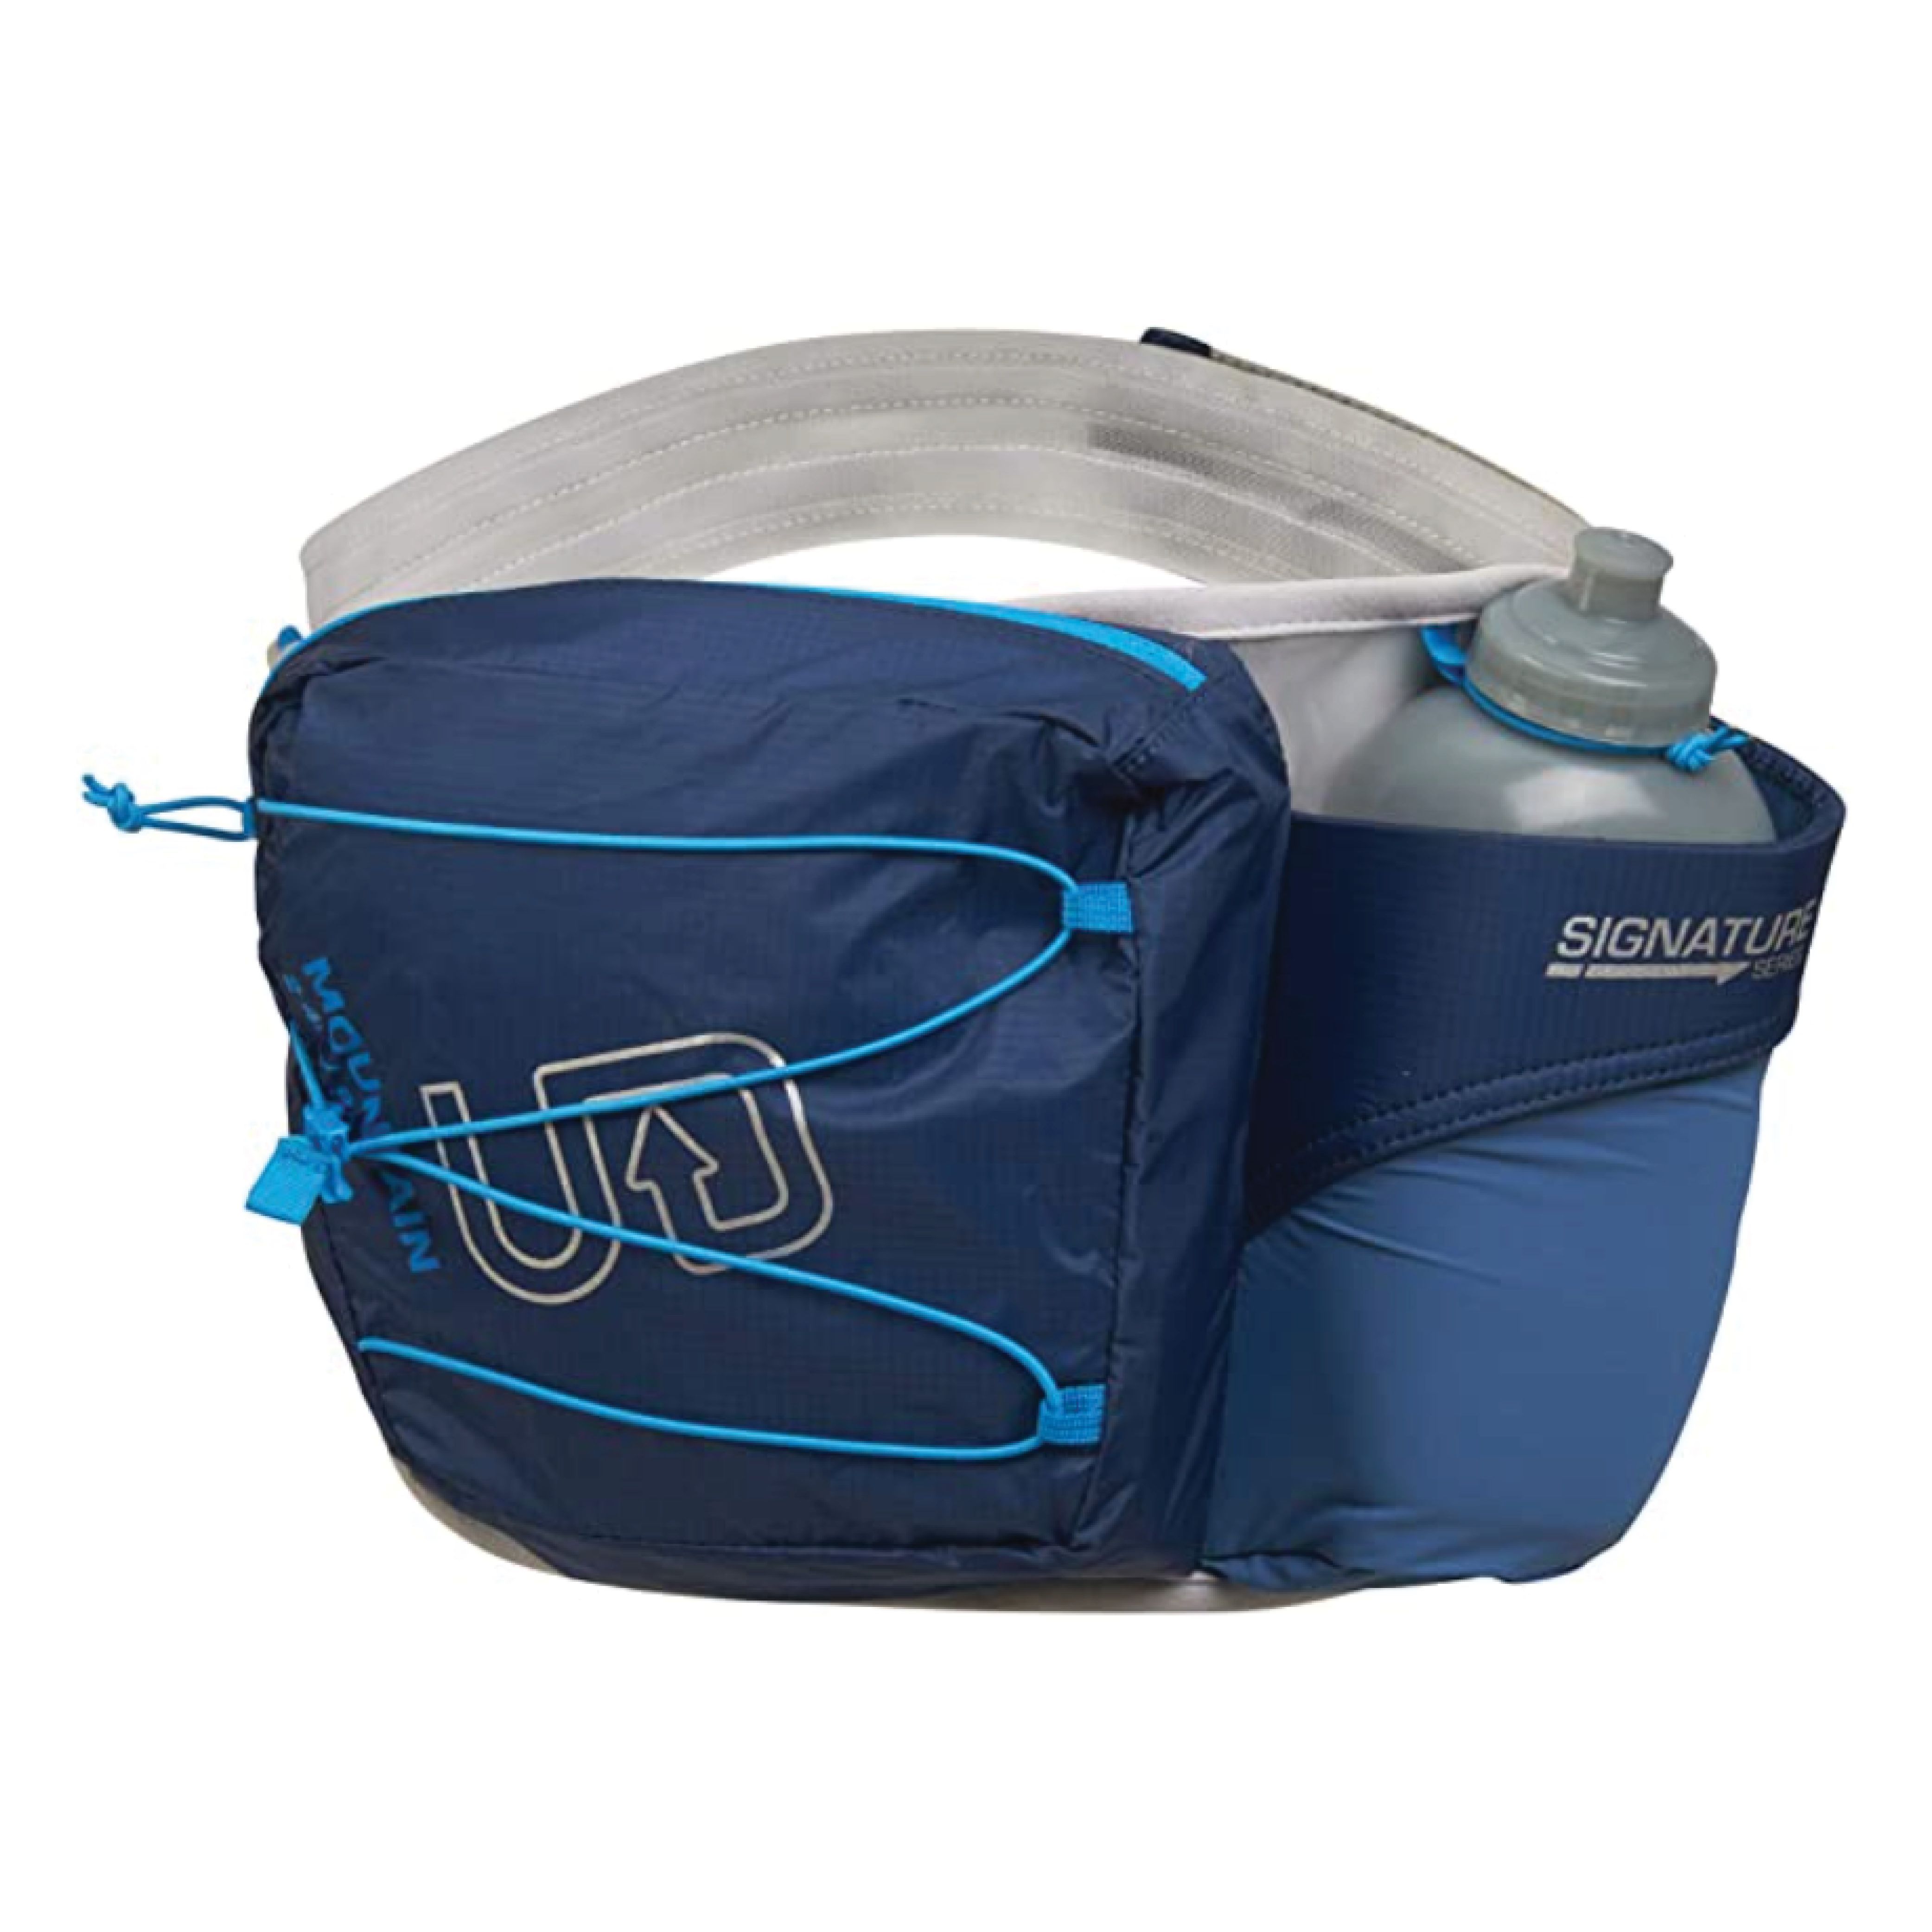 FuelBelt Uno Waist Pack Lightweight Hydration Running Belt and Water Bottle 